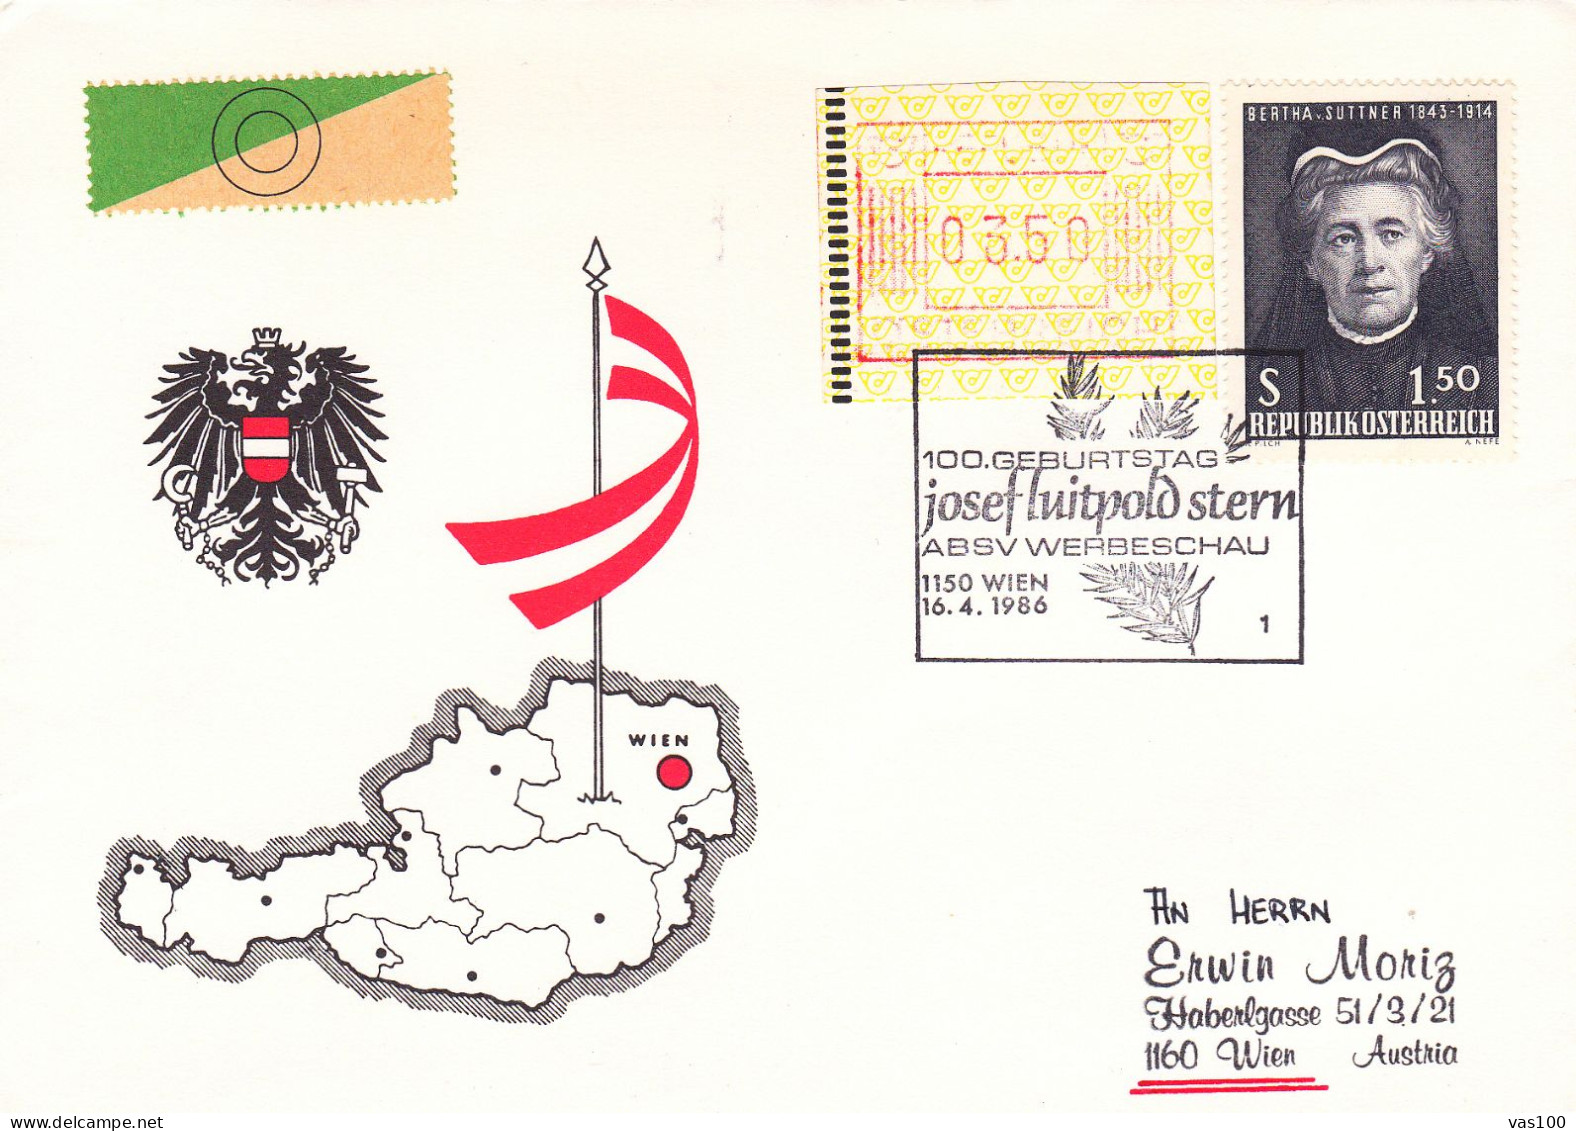 AUSTRIA POSTAL HISTORY / ABSV WERBESCHAU, 16.04.1986 - Covers & Documents